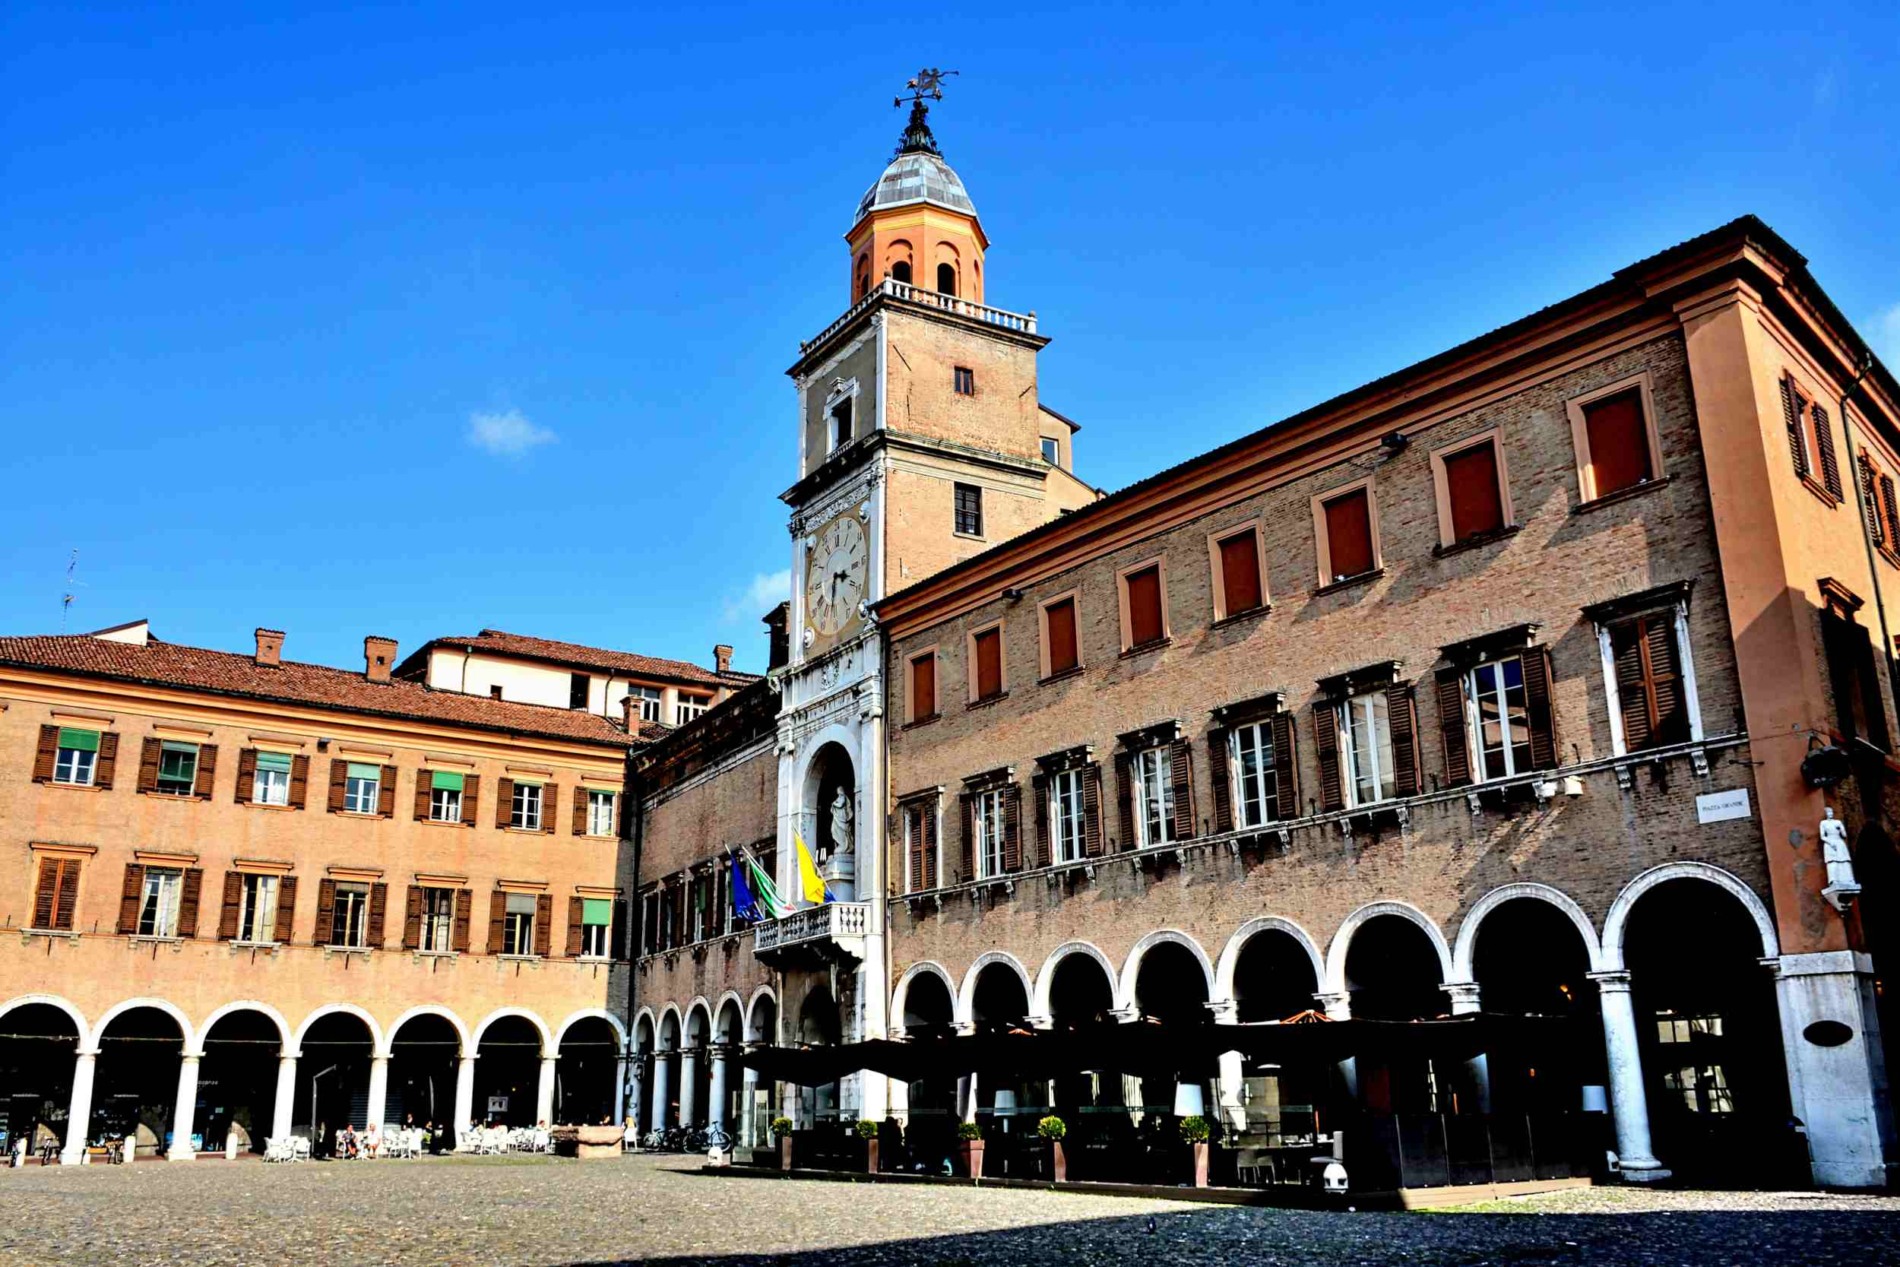 Palazzo Comunale Modena, Emilia-Romagna Region of Italian Landmarks